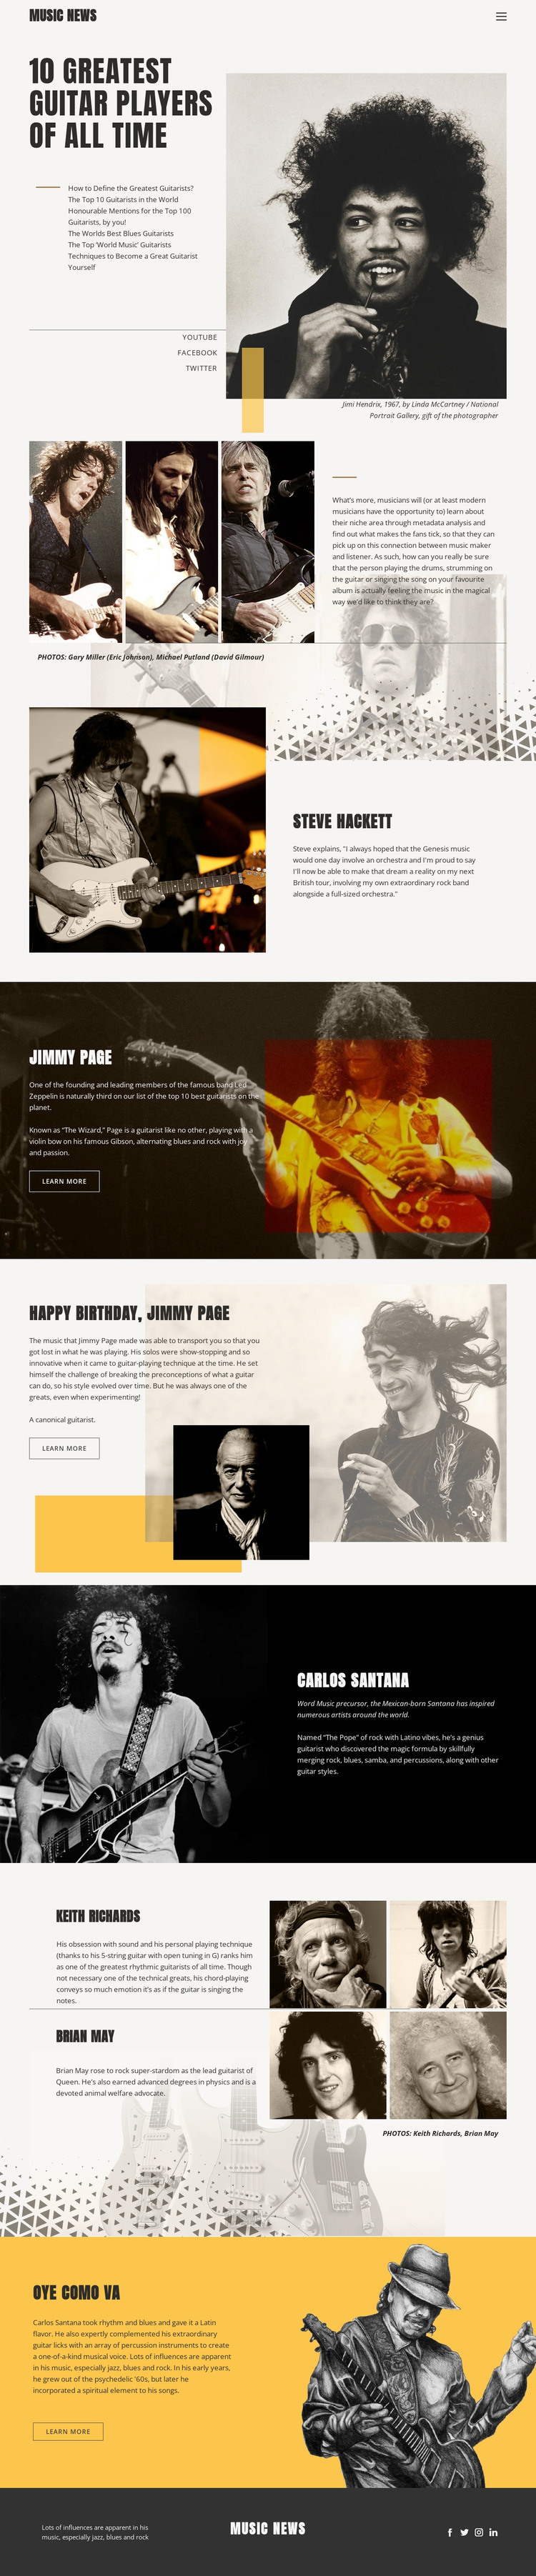 The Top Guitar Players WordPress Theme